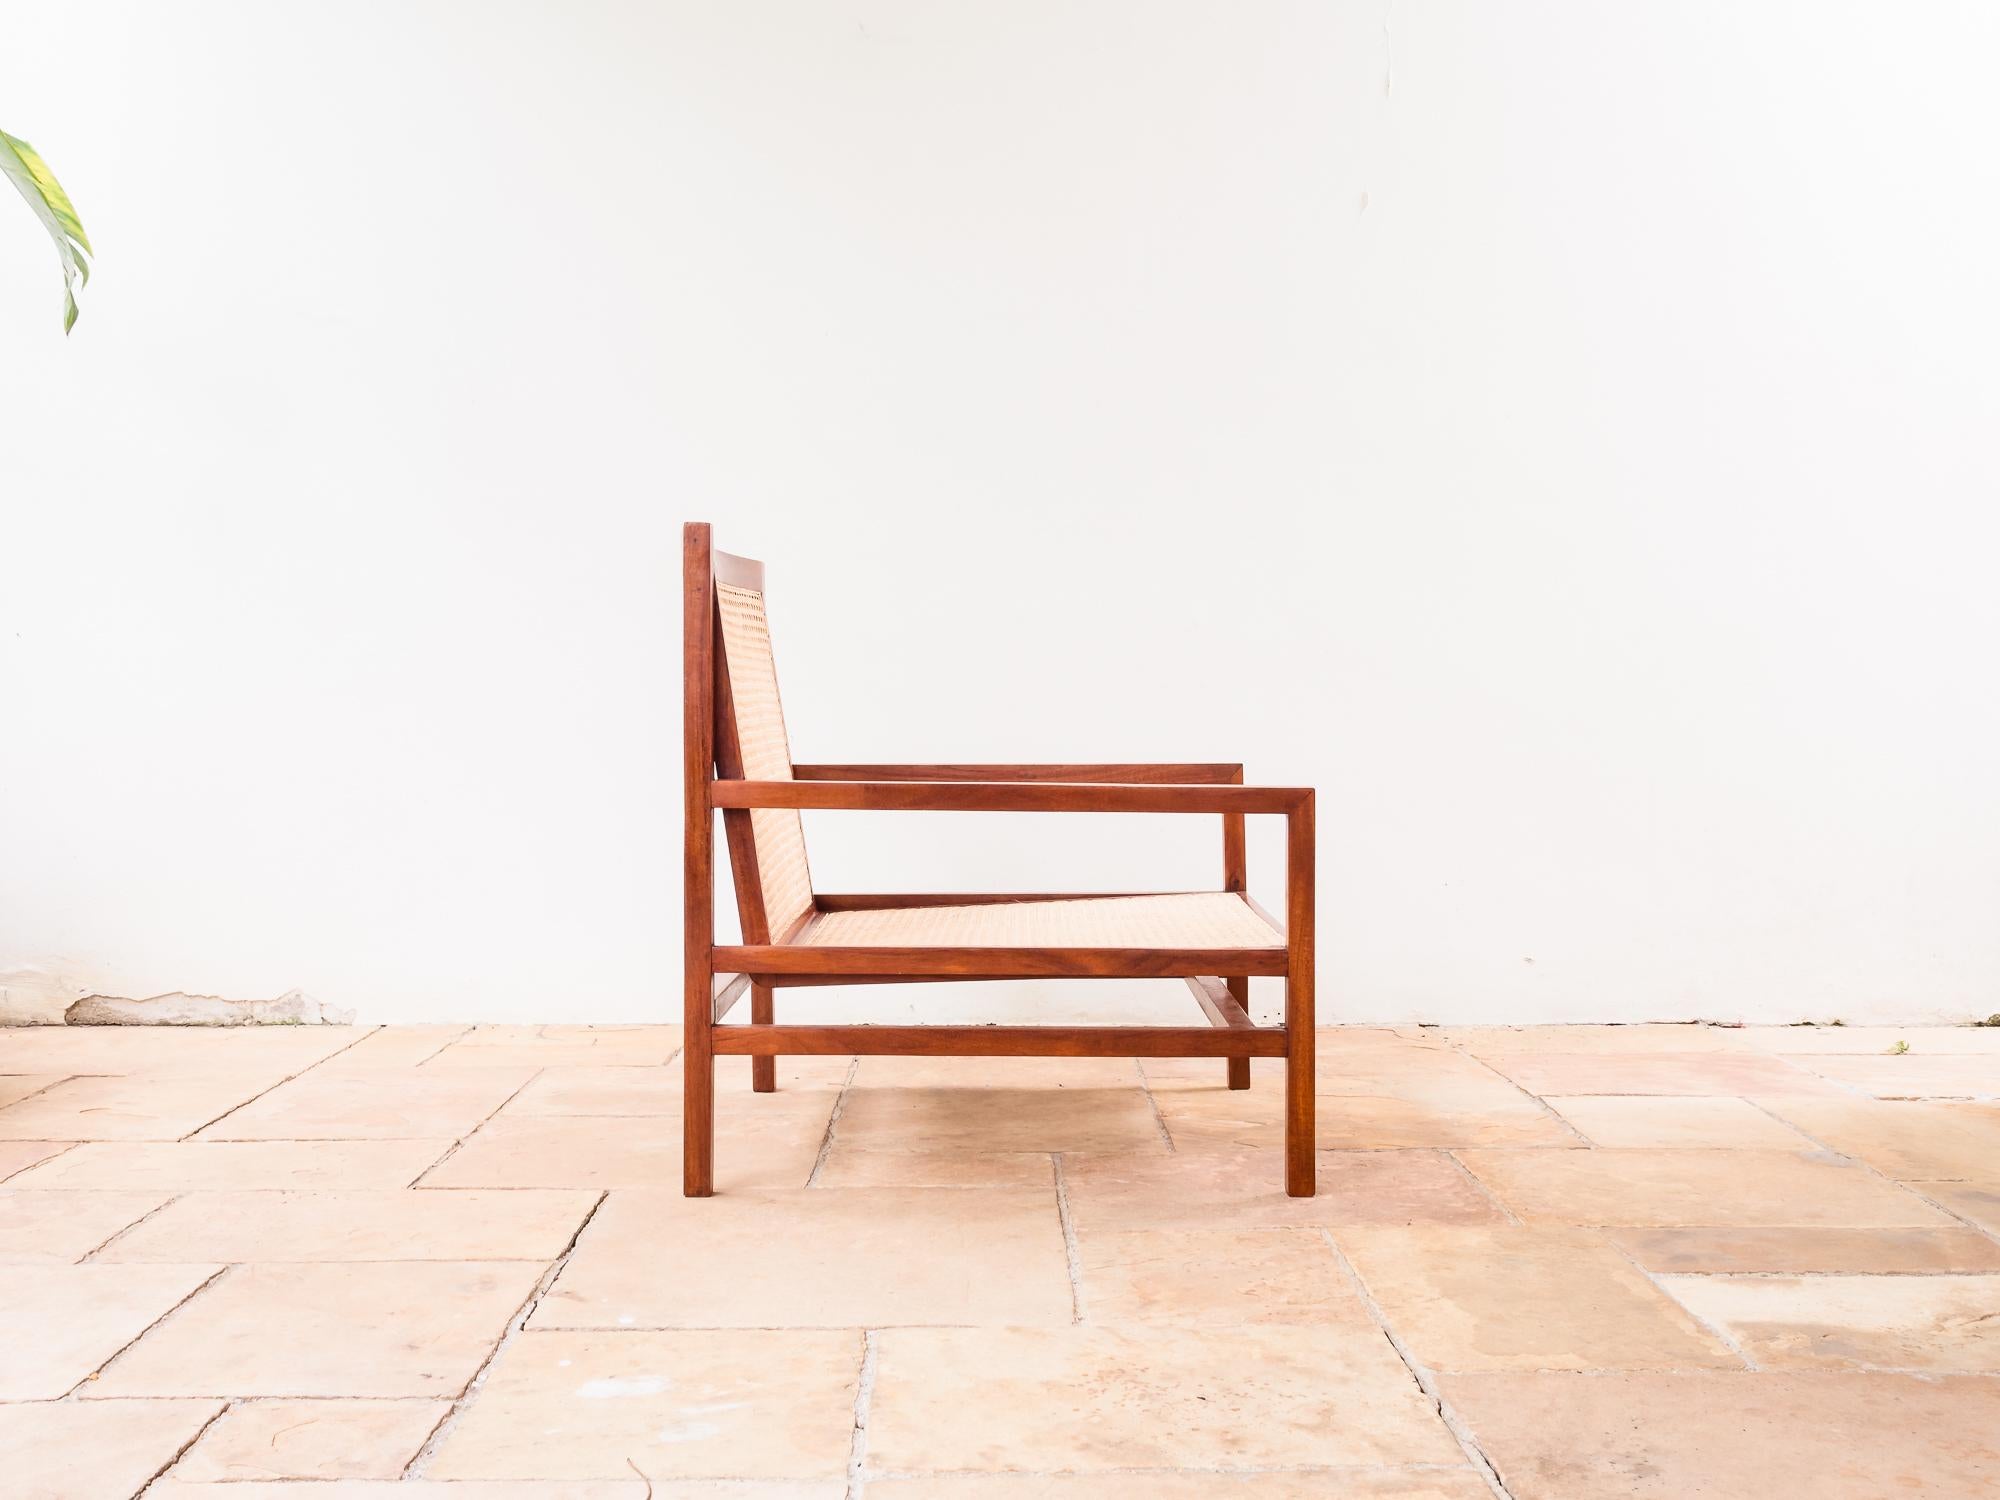 20th Century Brazilian Modern Pair of Cane Lounge Chairs by Joaquim Tenreiro, Early 1960s